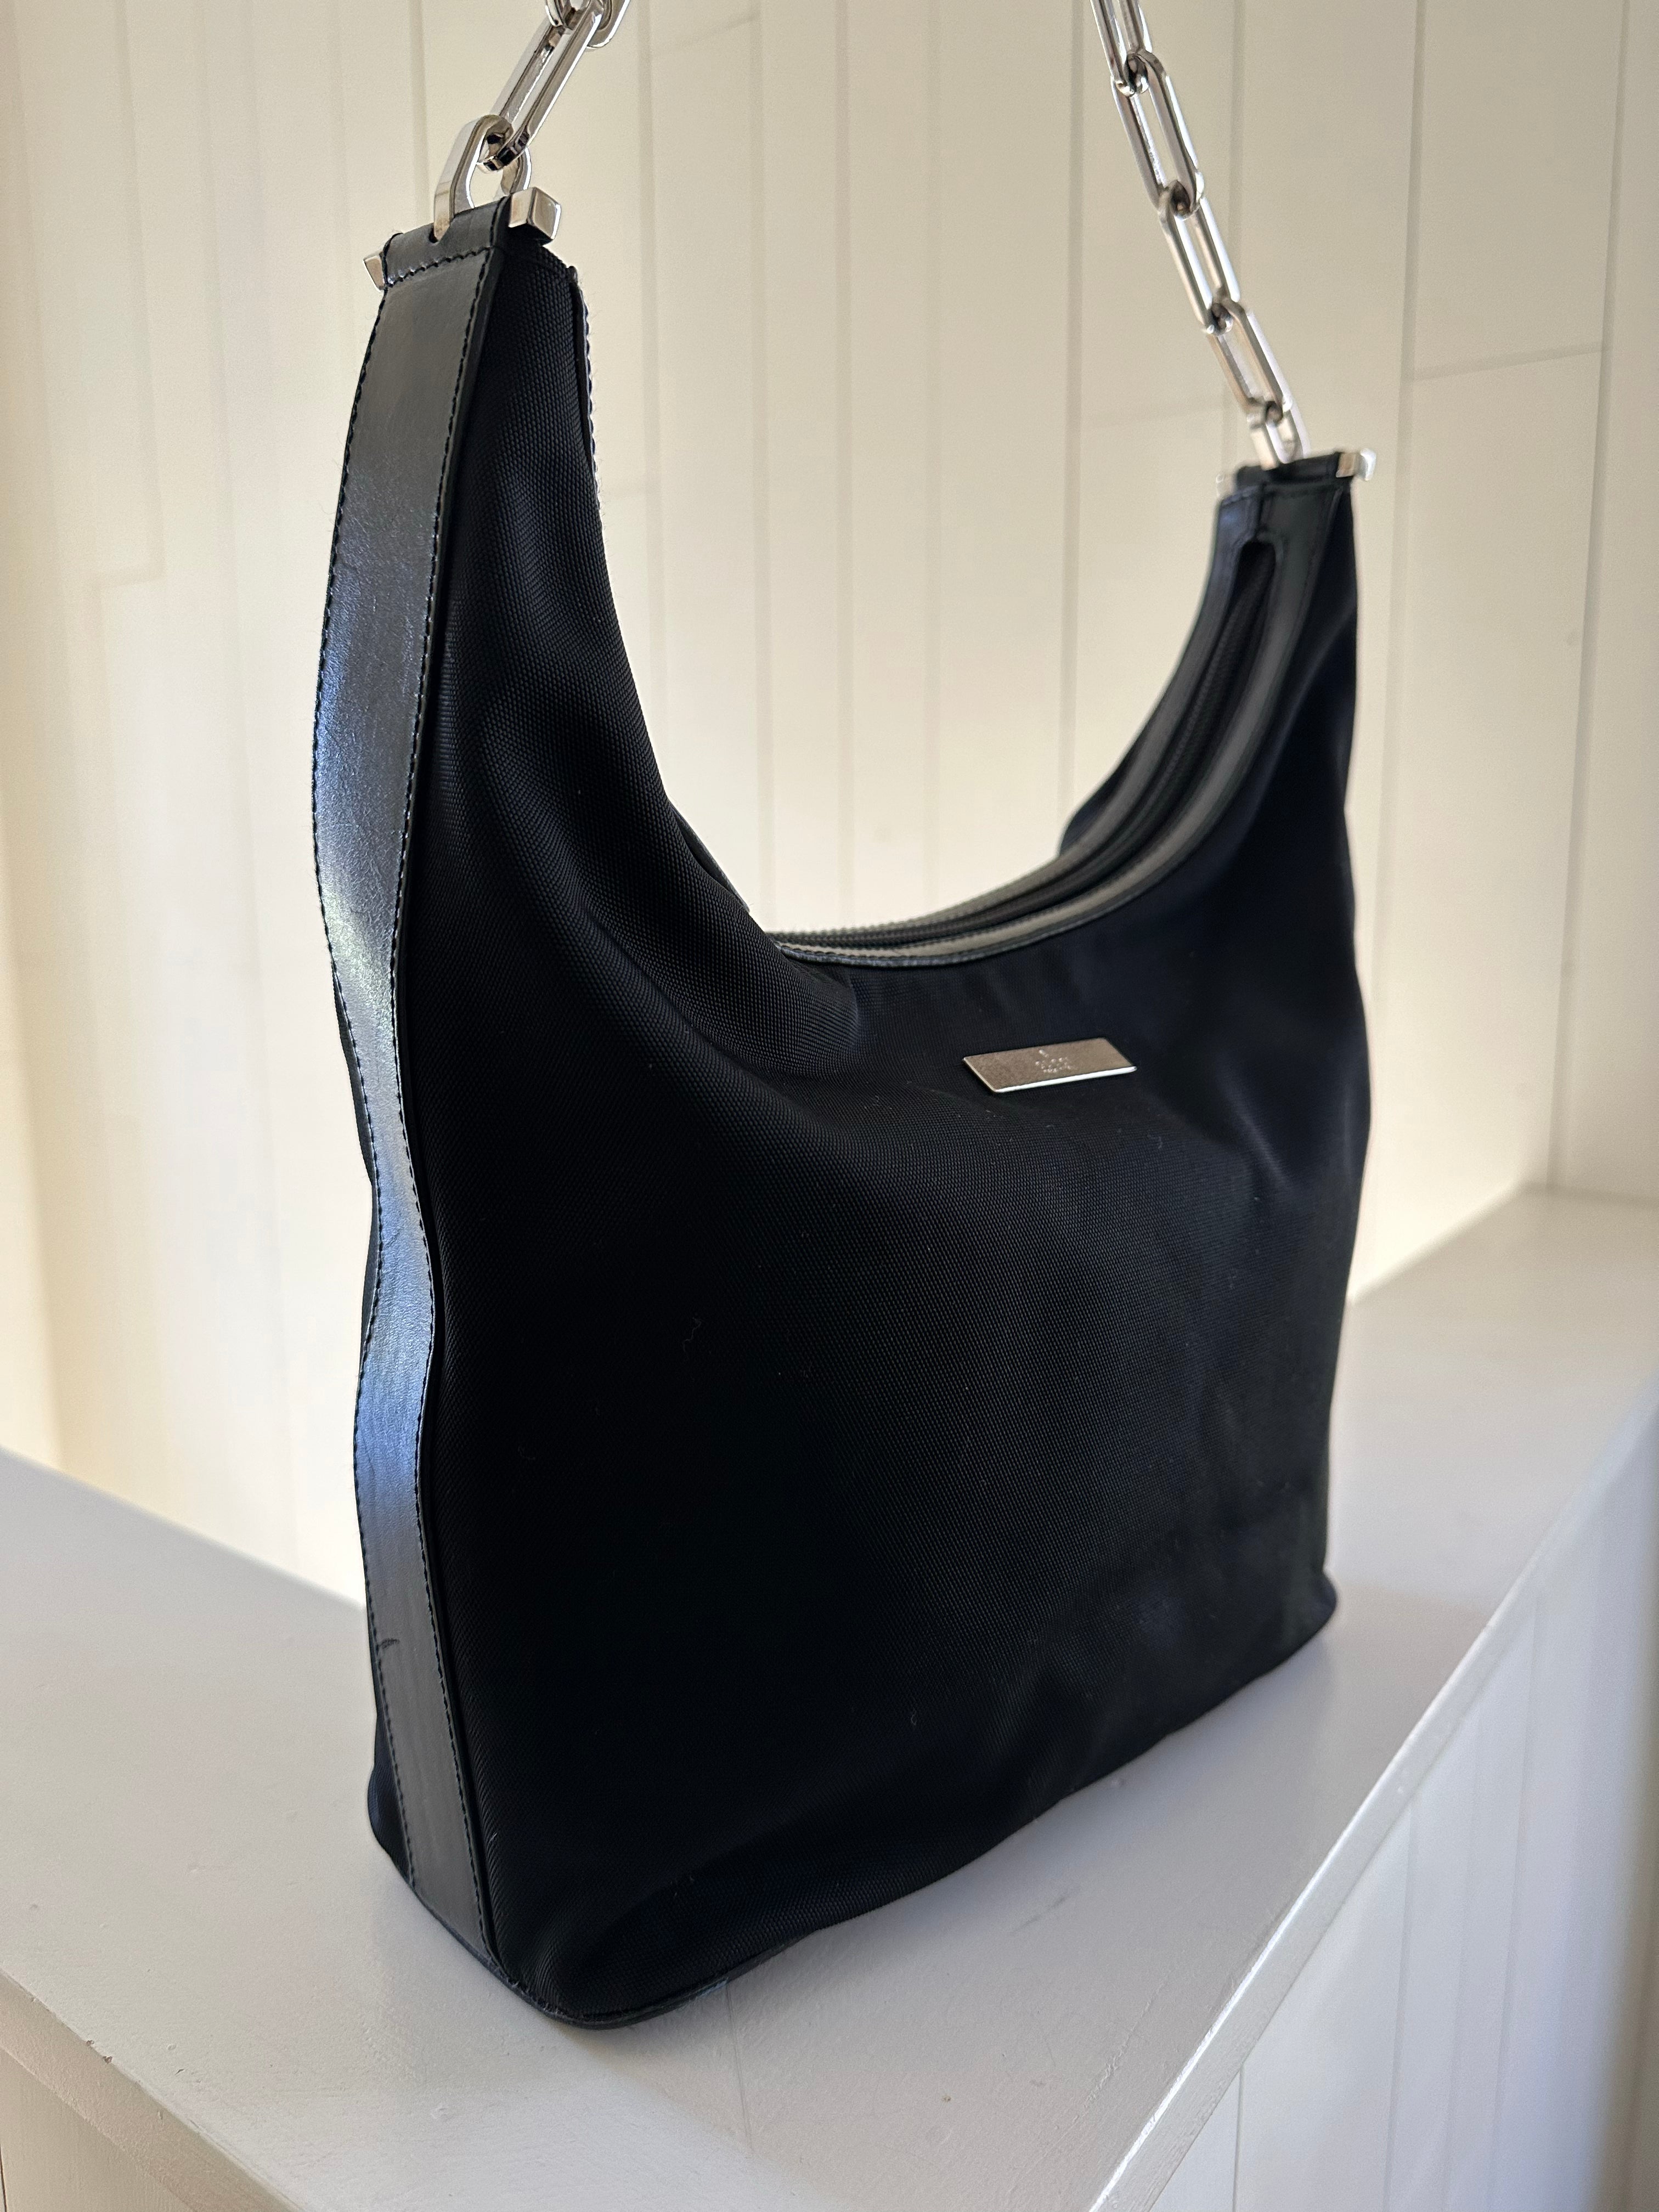 Cromia Gold Metallic & Leather Handbag Shoulder bag Purse - Ruby Lane